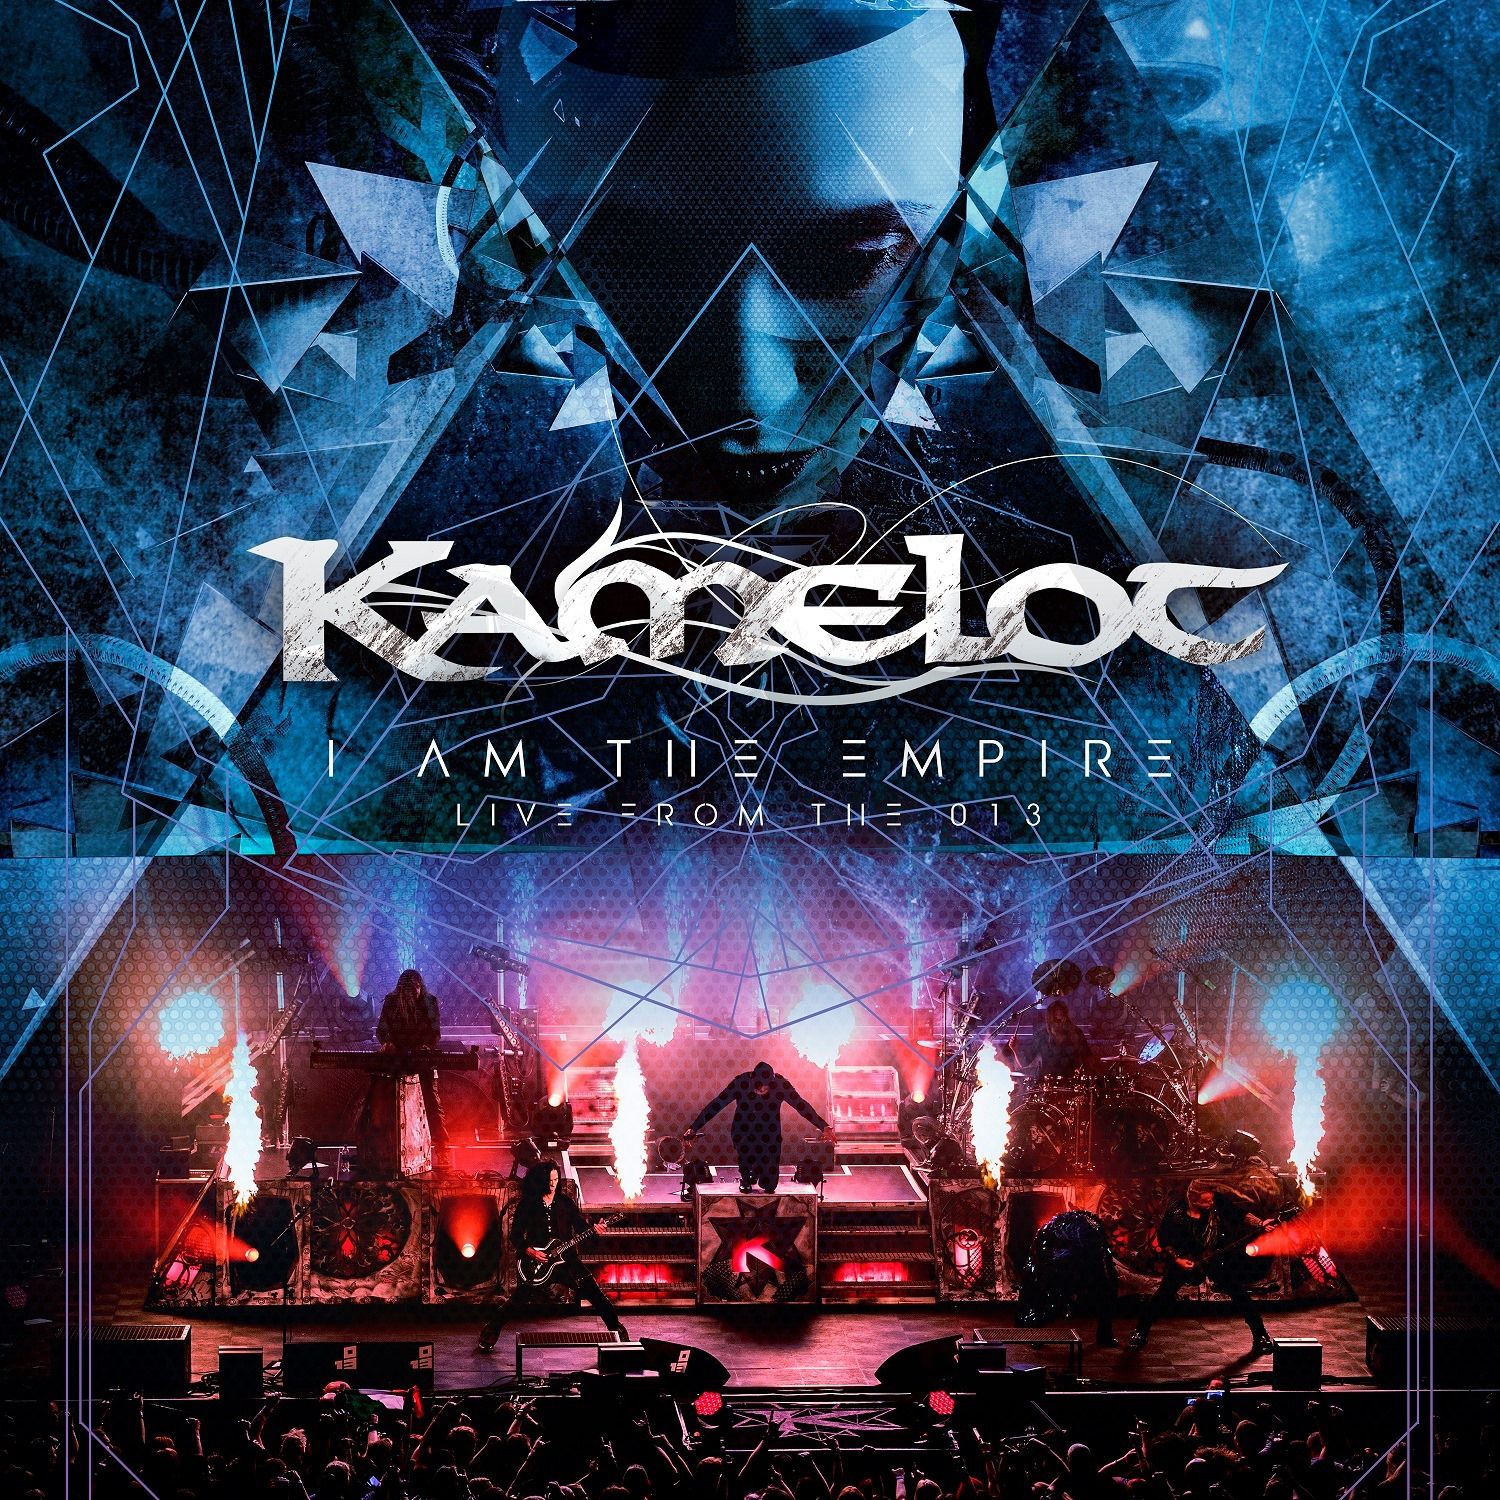 'Sacrimony'-Clip vom "I Am The Empire"-Live-Album/DVD/Blu-ray ist online